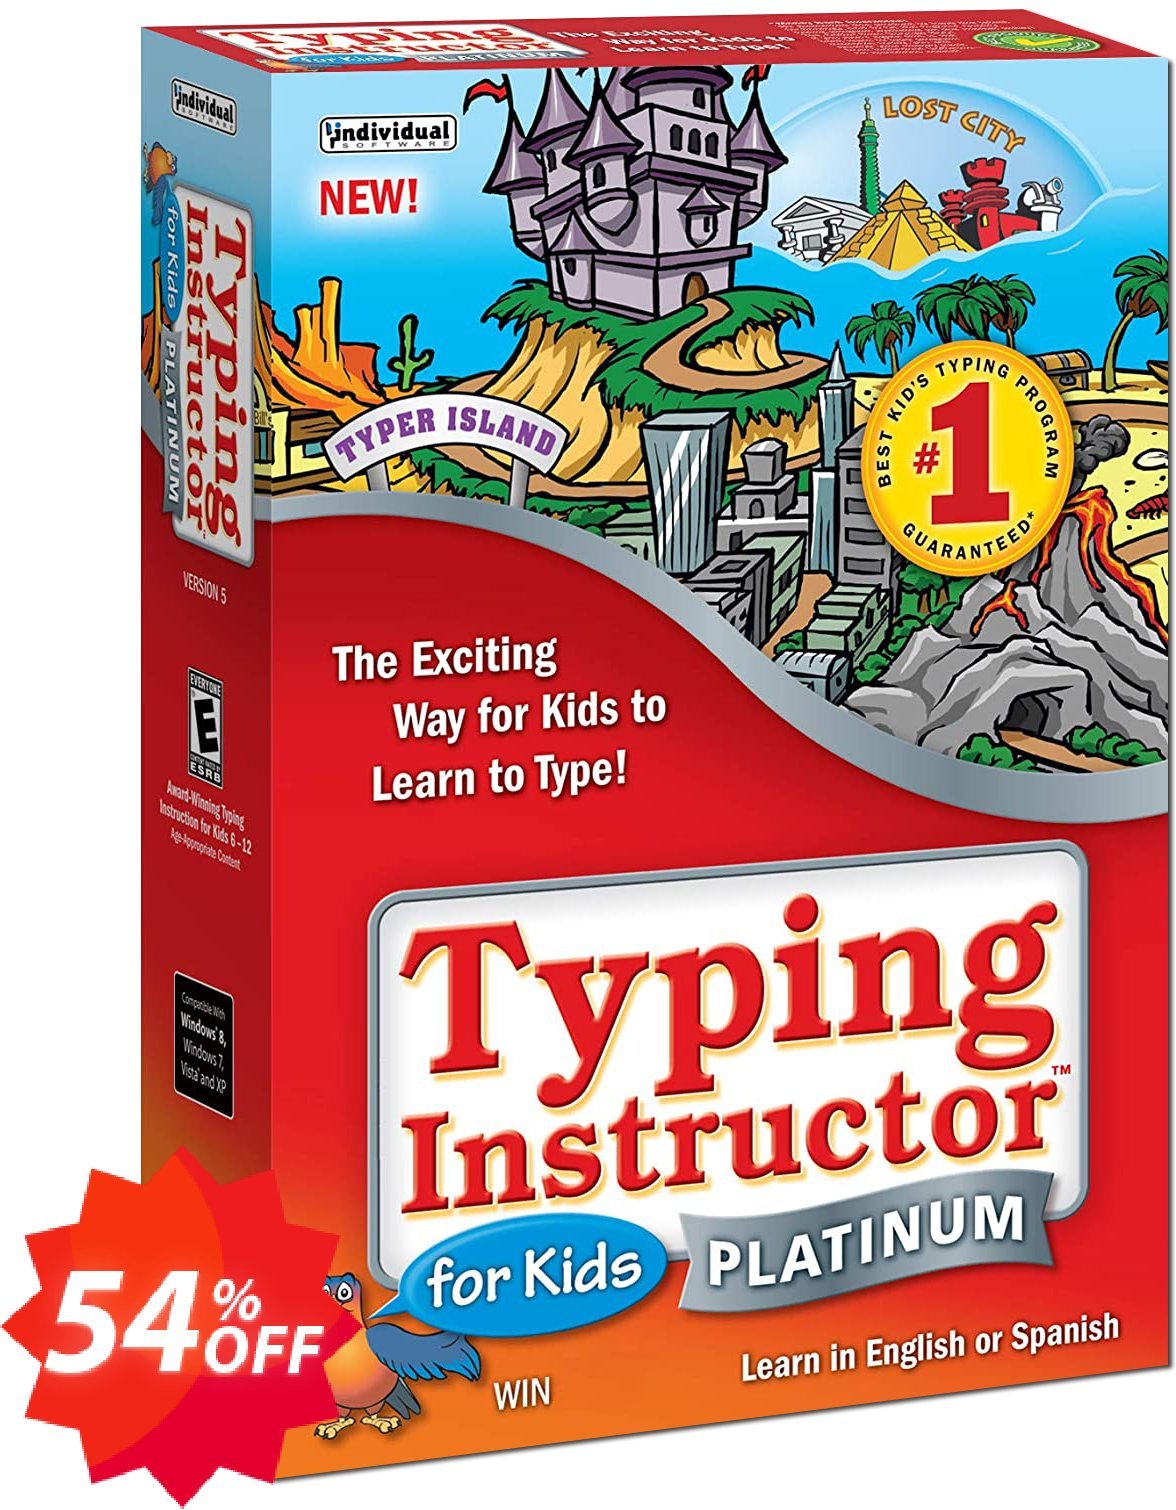 Typing Instructor for Kids Platinum - International Version US Keyboard Coupon code 54% discount 